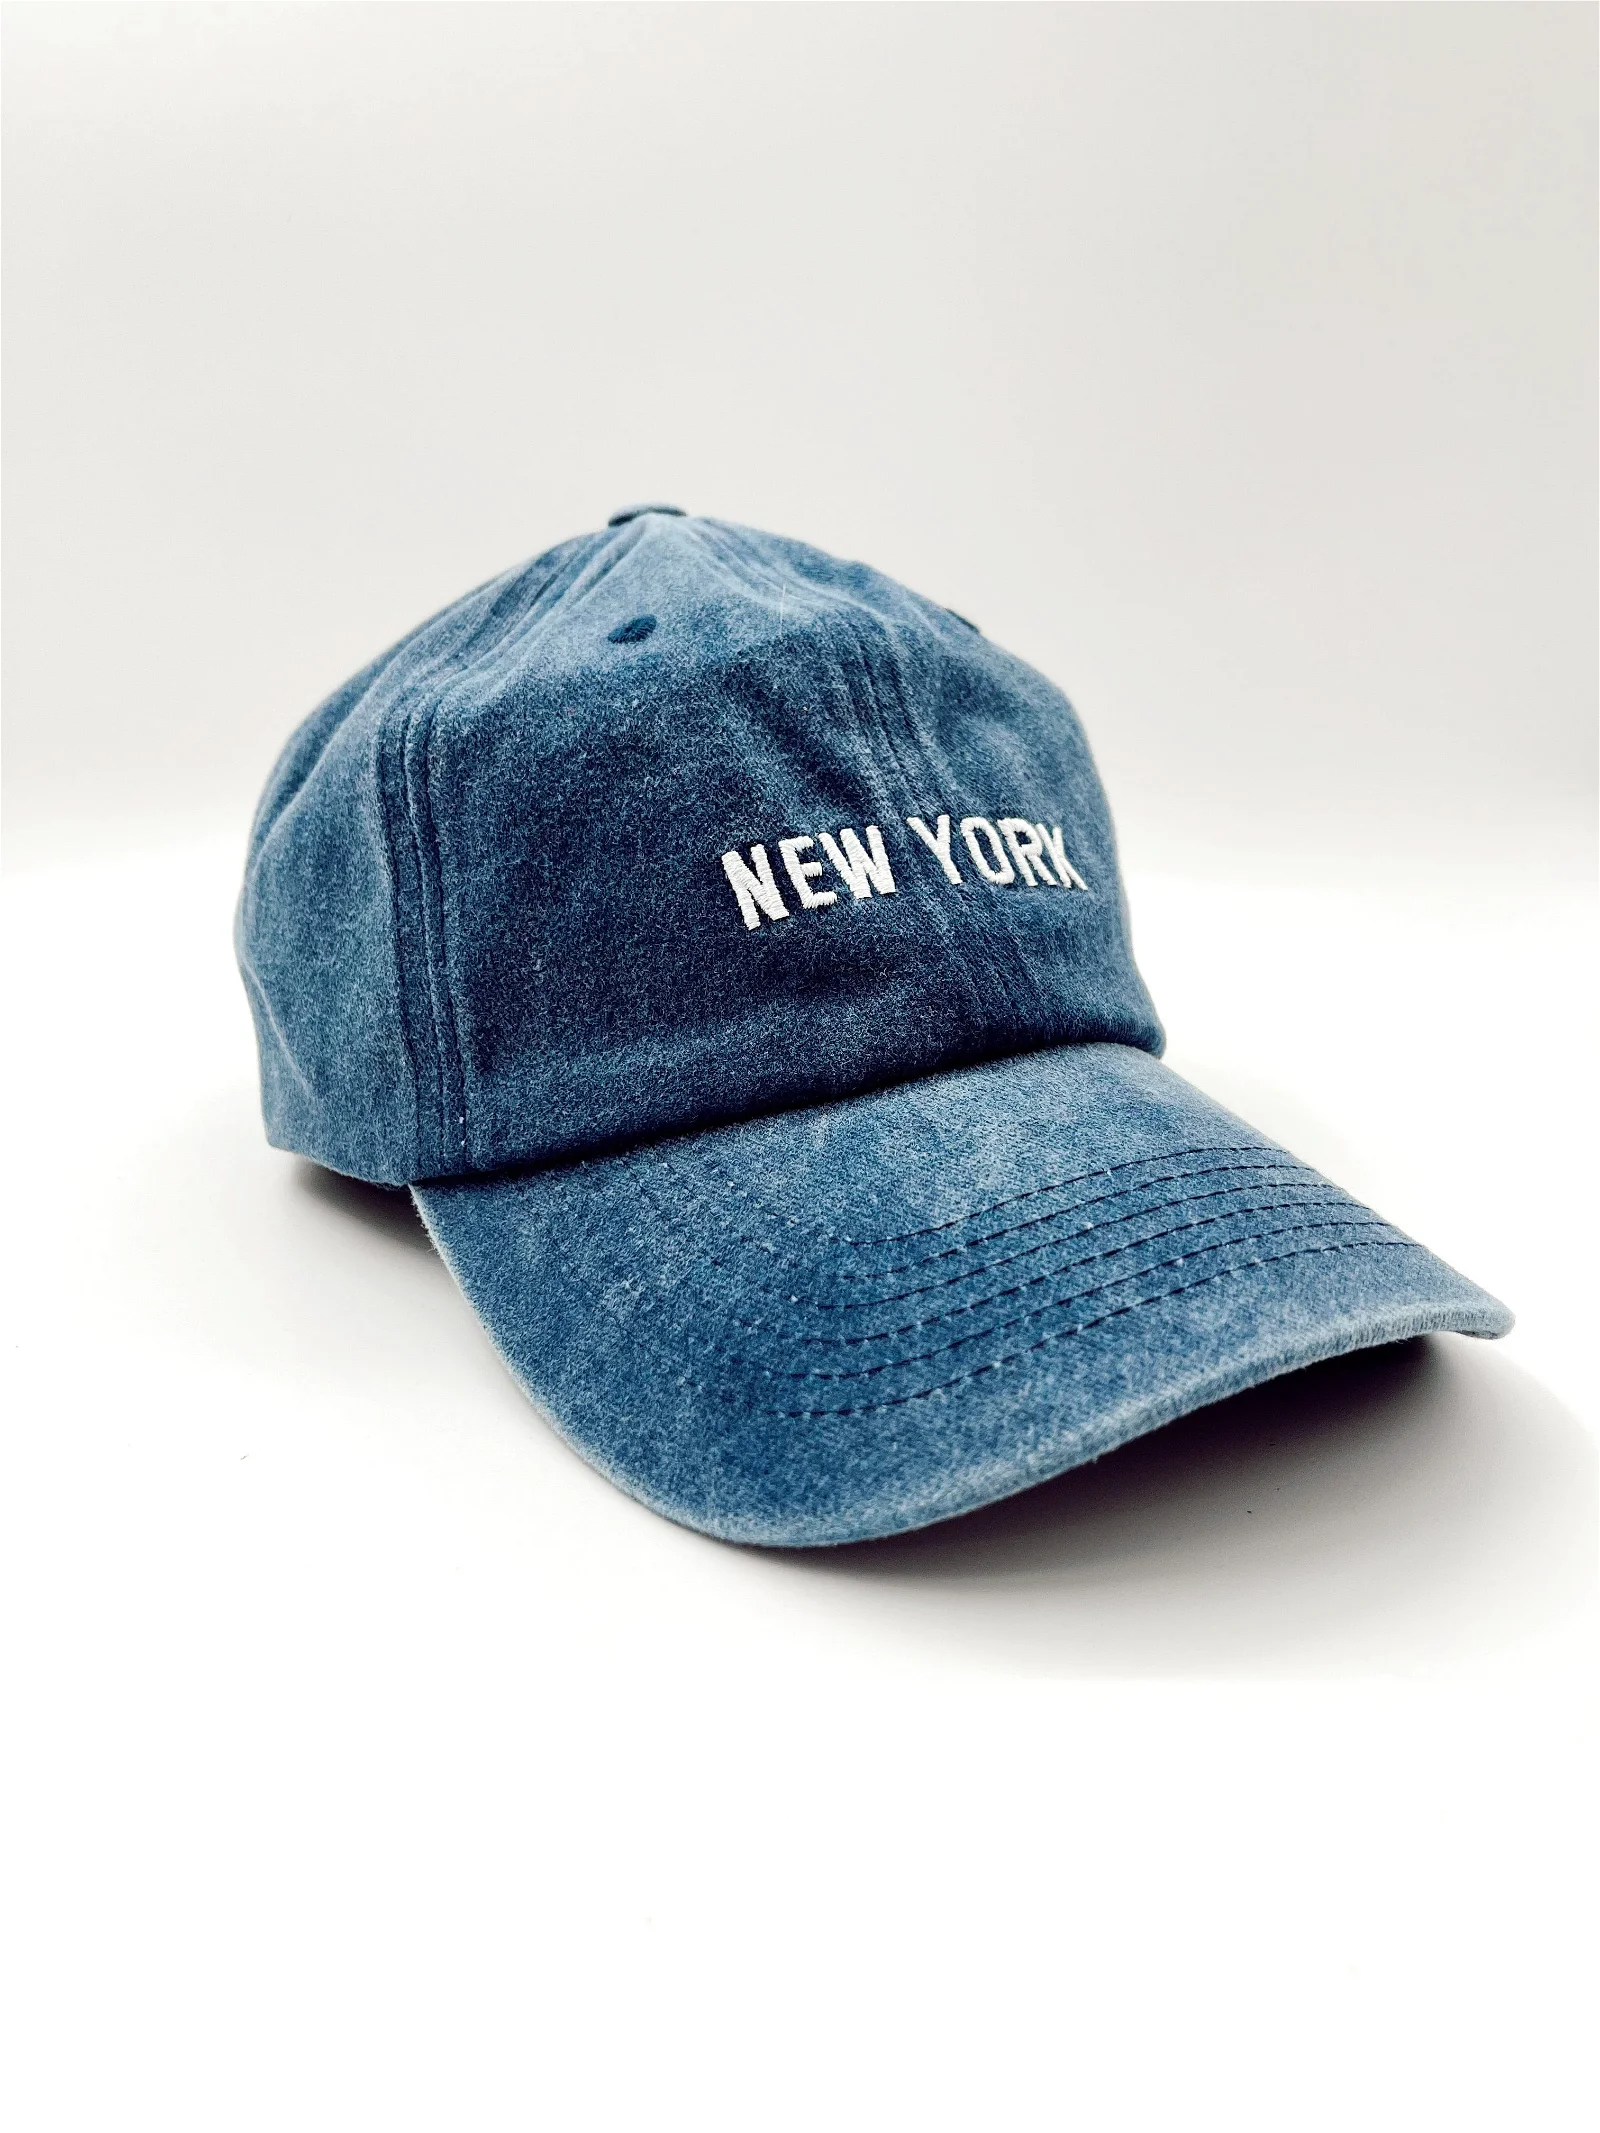 Image of New York Baseball Hat